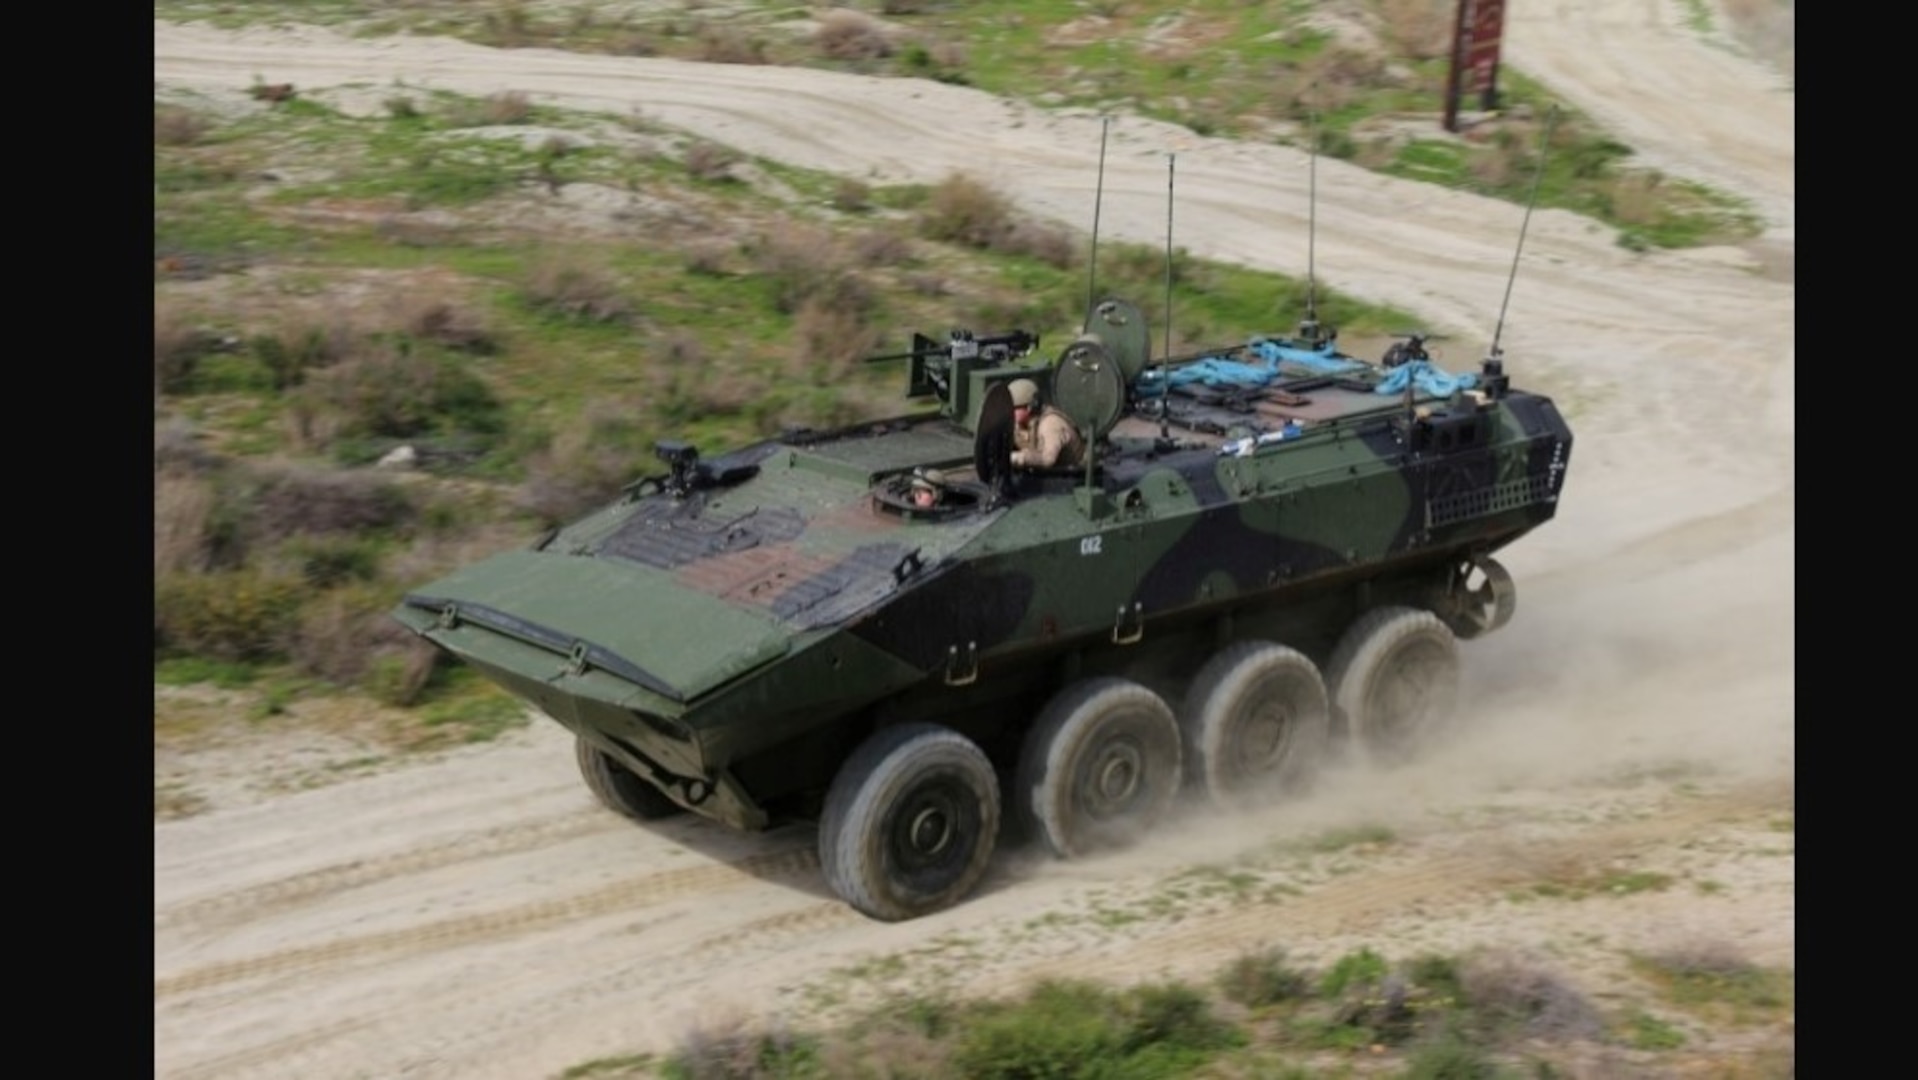 marine corps amphibious combat vehicle driving on dirt road